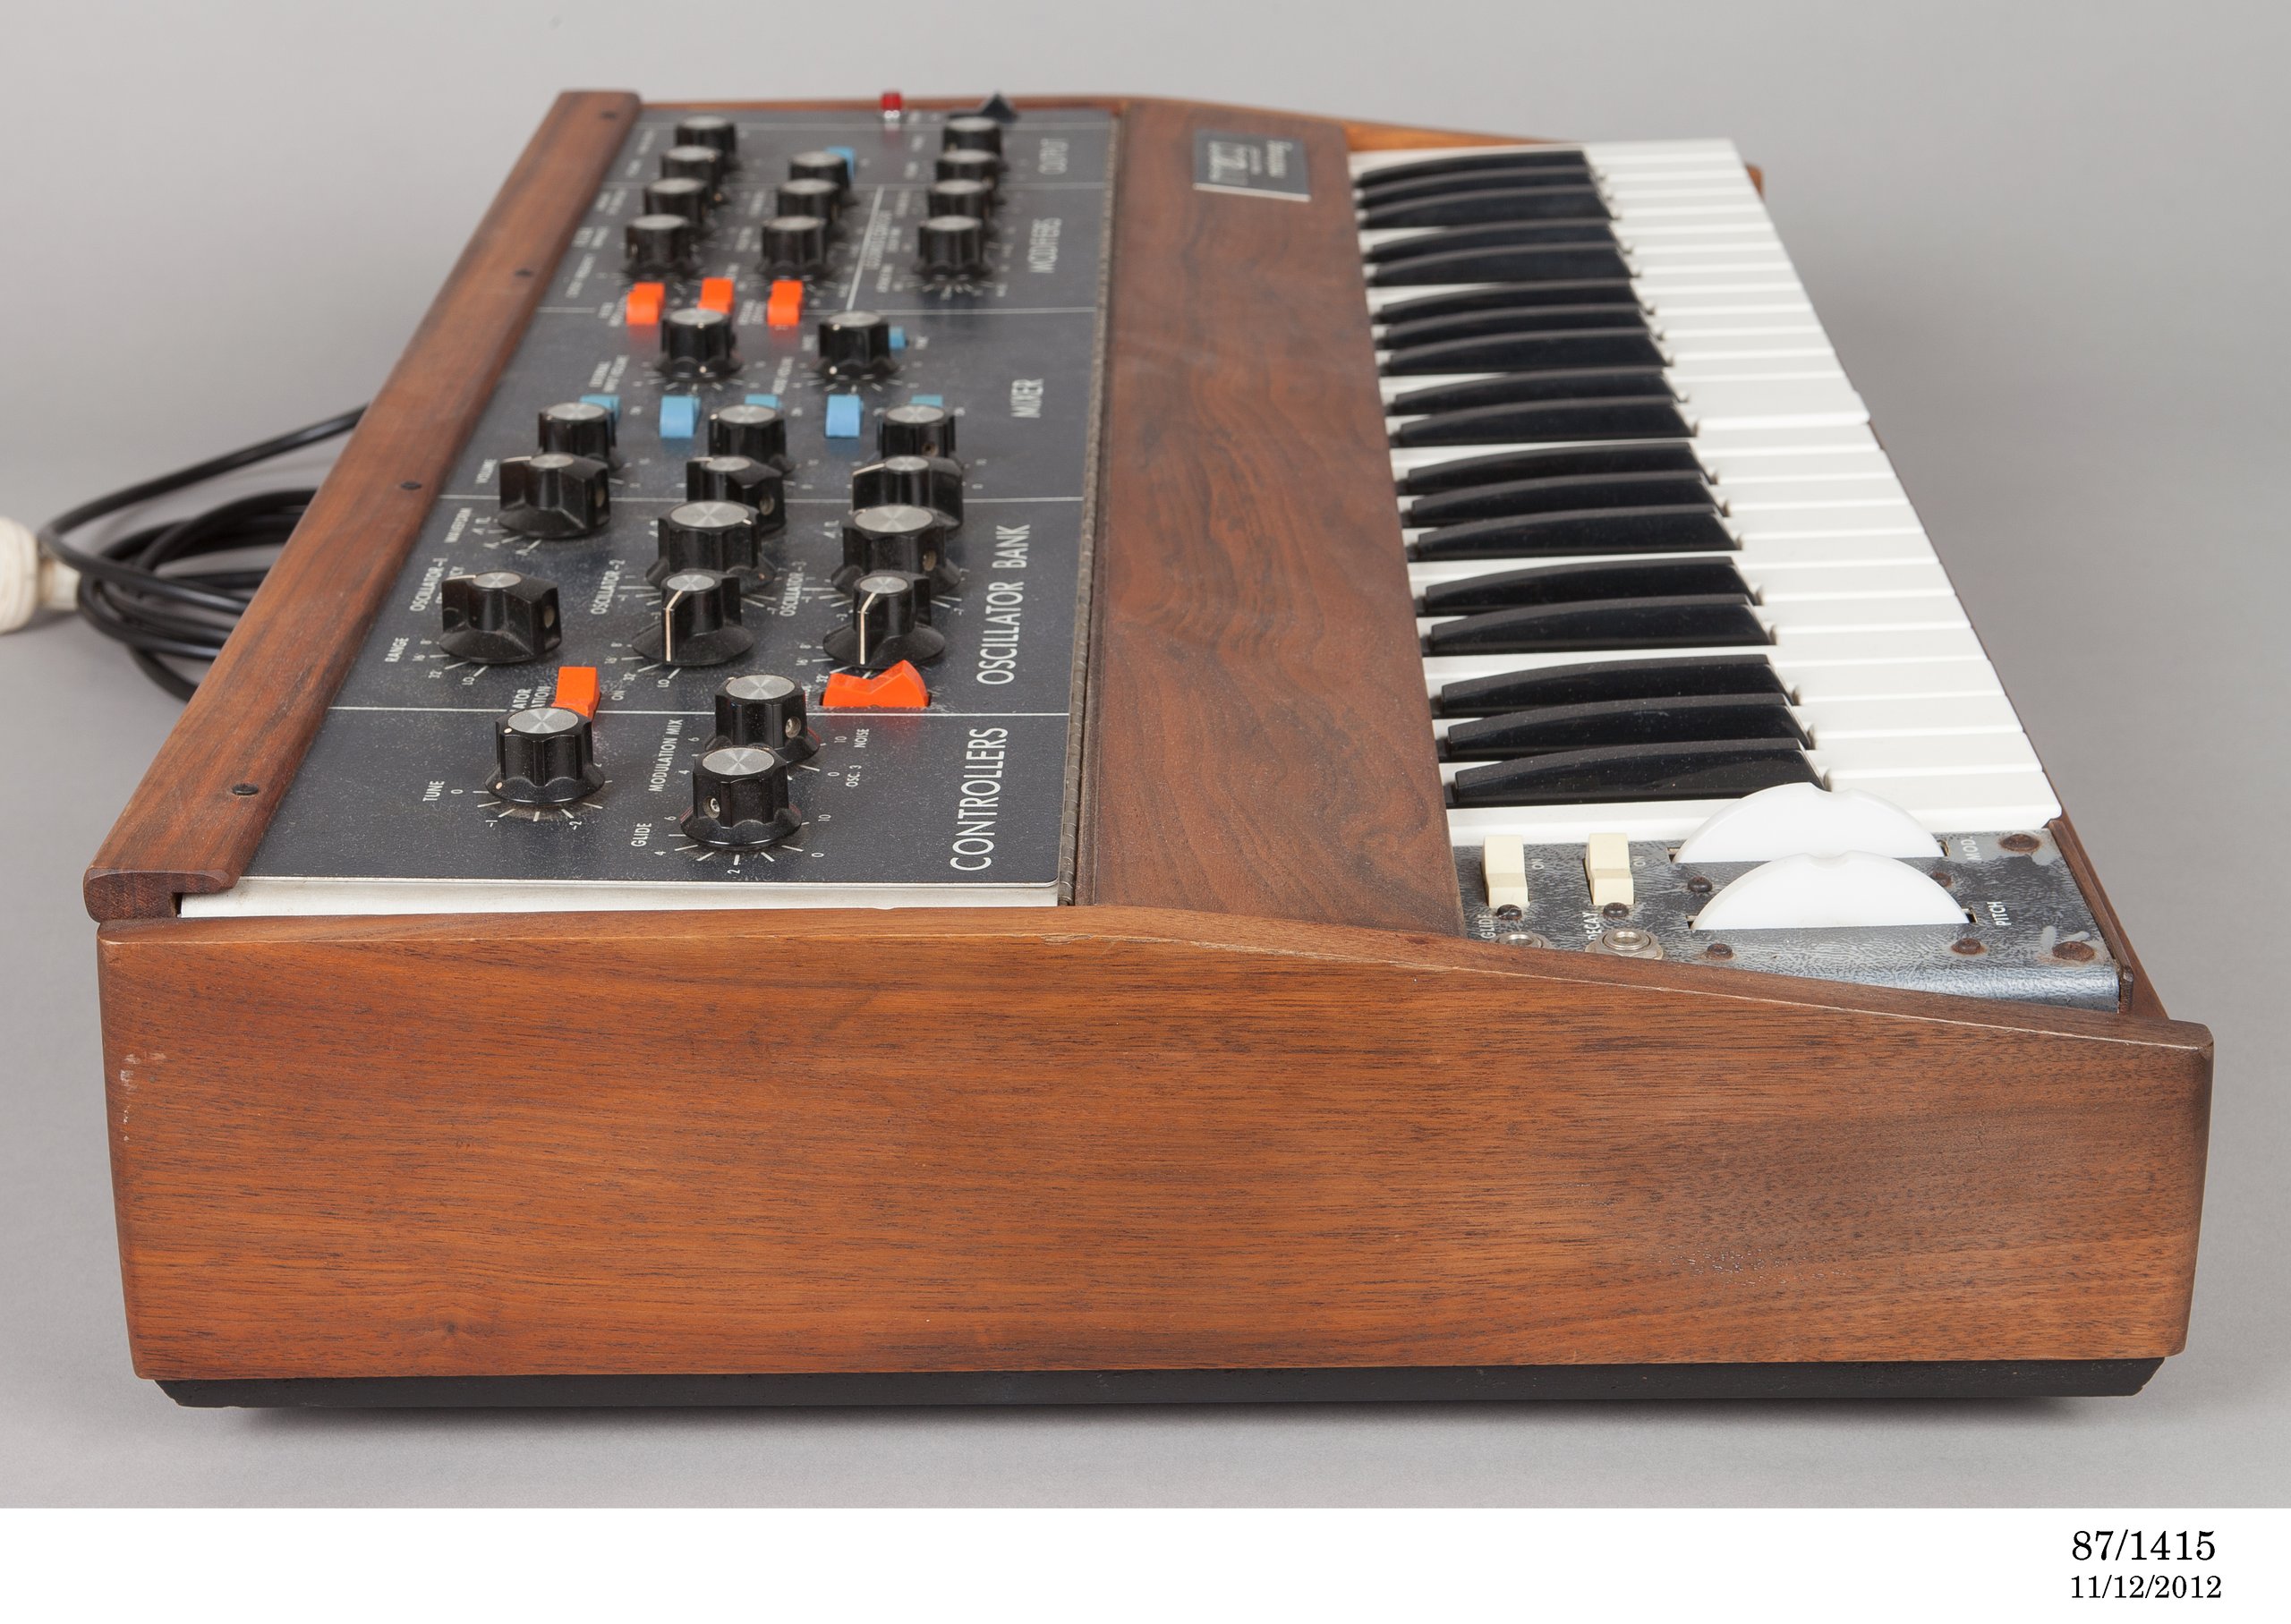 Minimoog synthesizer made by Moog Music Inc